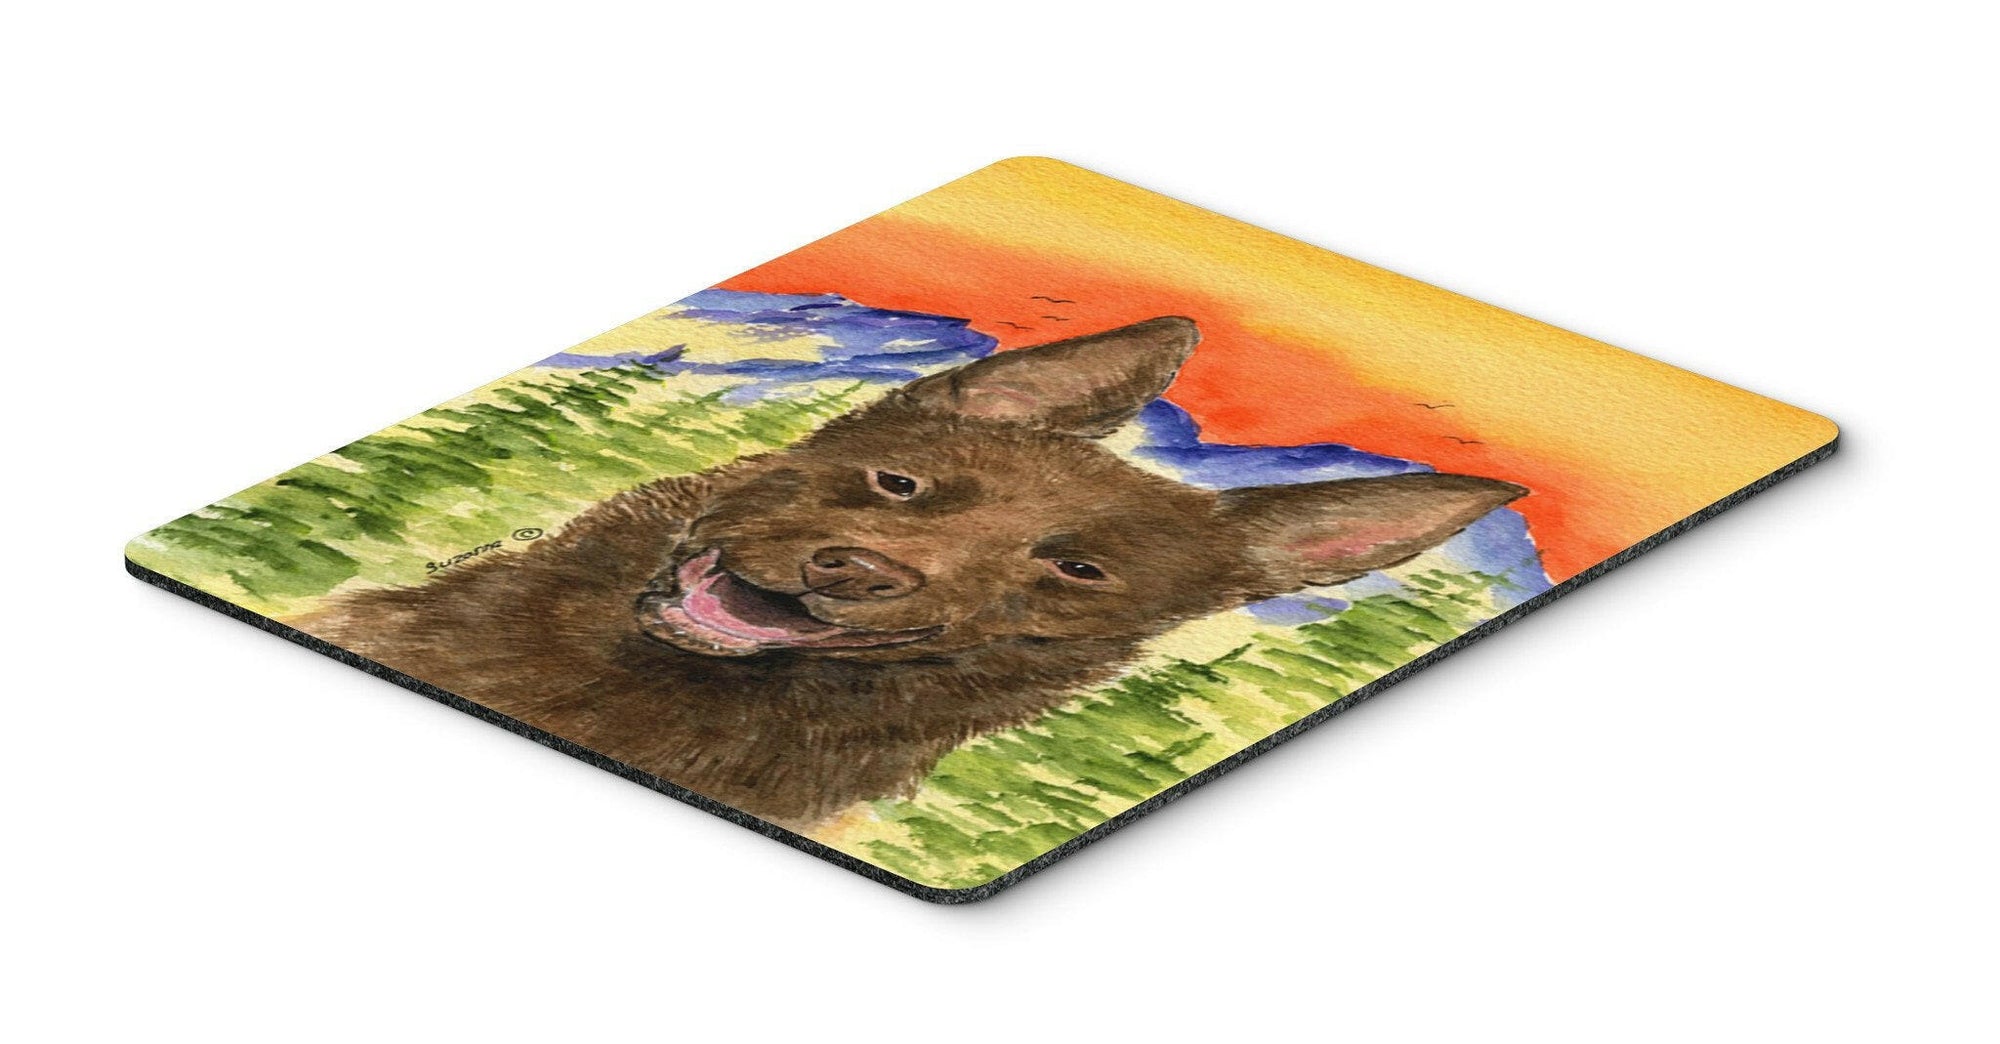 Australian Kelpie Mouse Pad / Hot Pad / Trivet by Caroline's Treasures